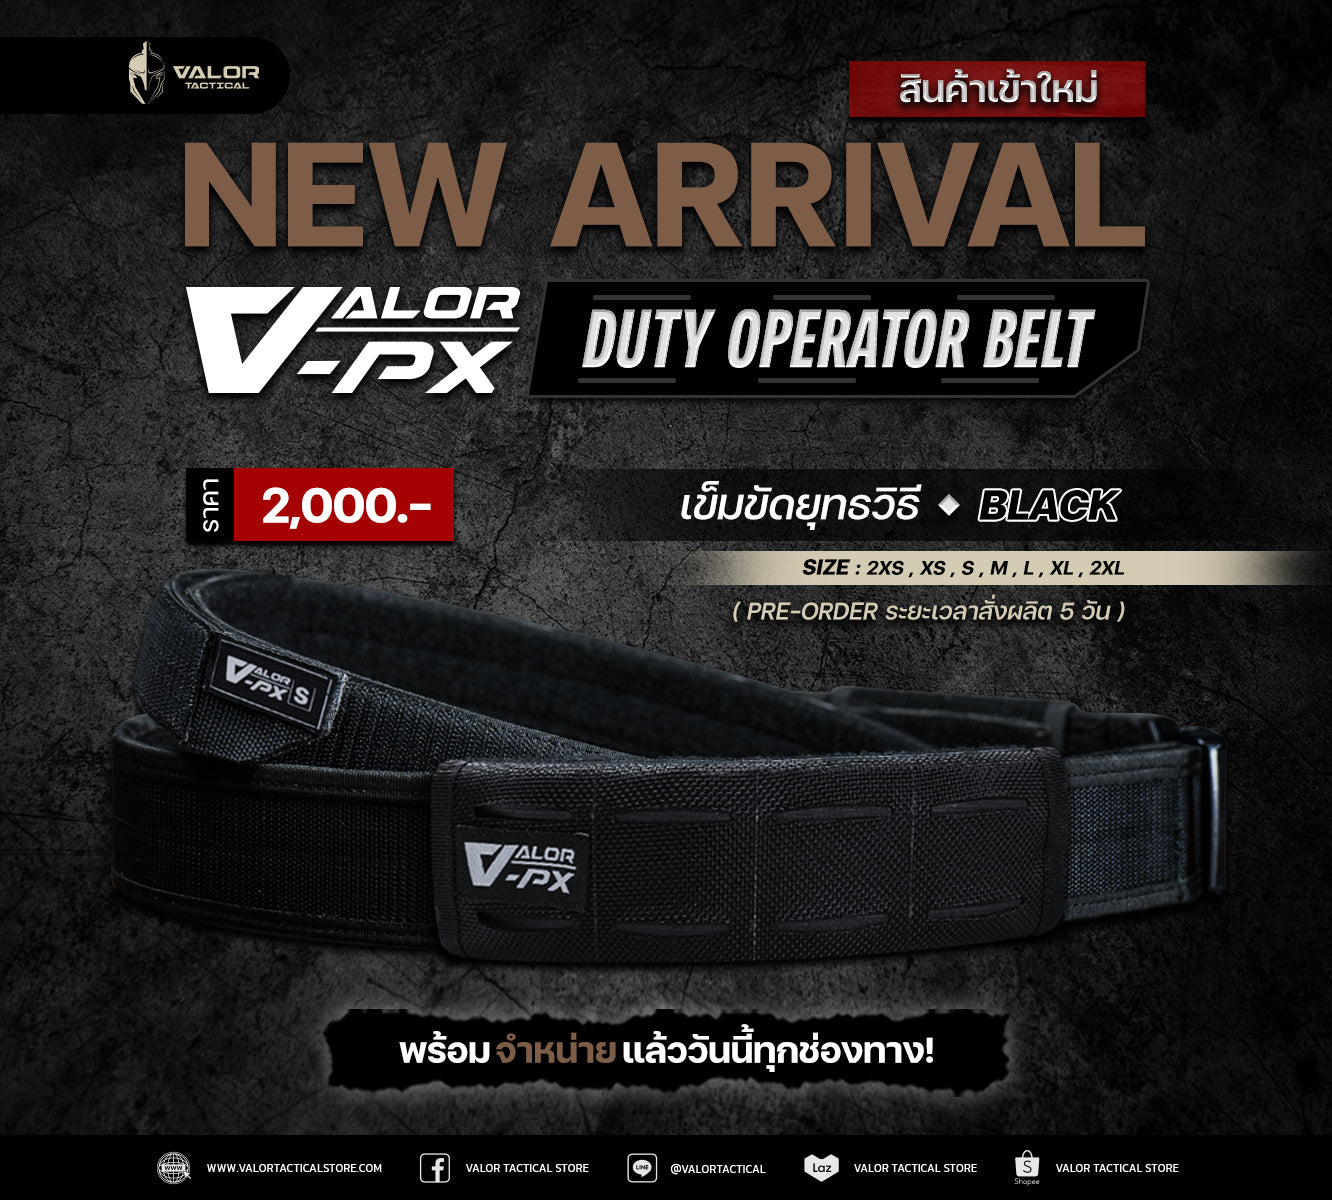 Valor PX 2" Duty operater belt (Pre-Order 5 Days)